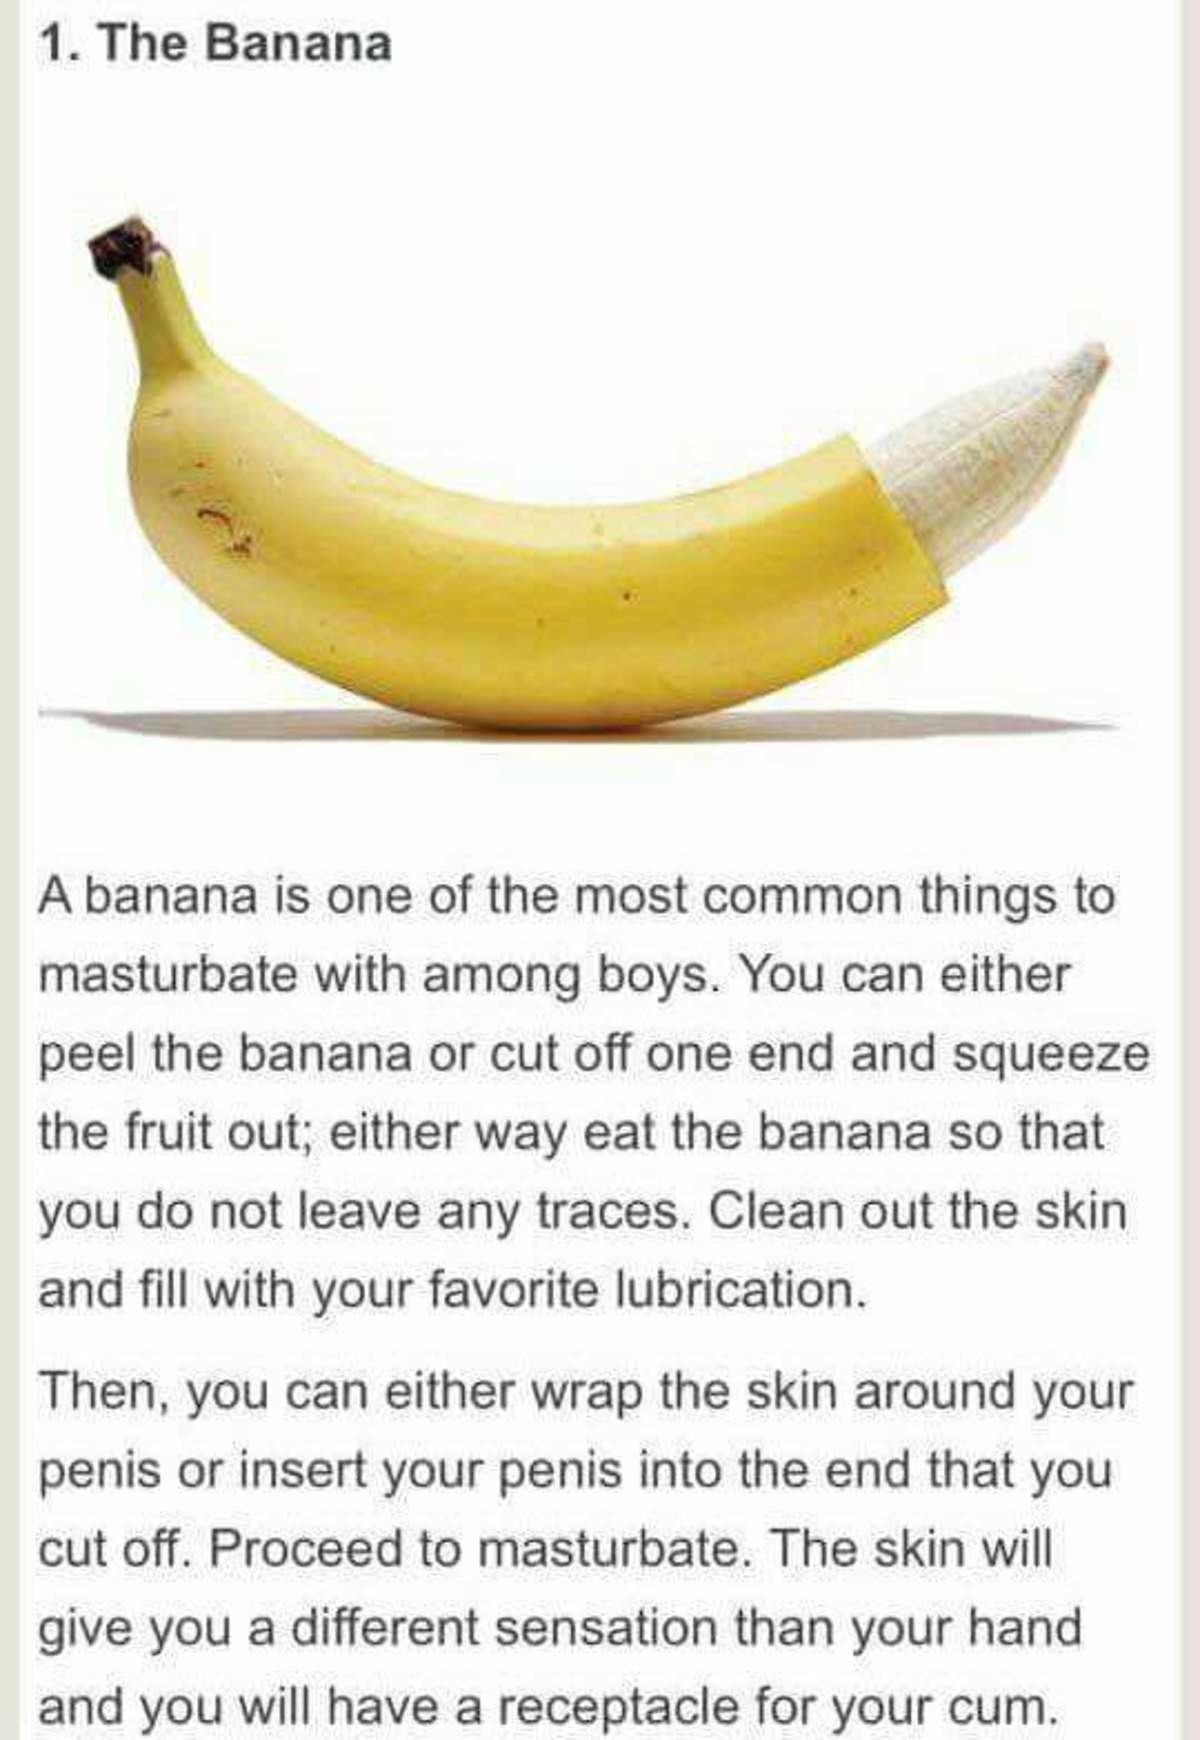 Banana peel masturbation image